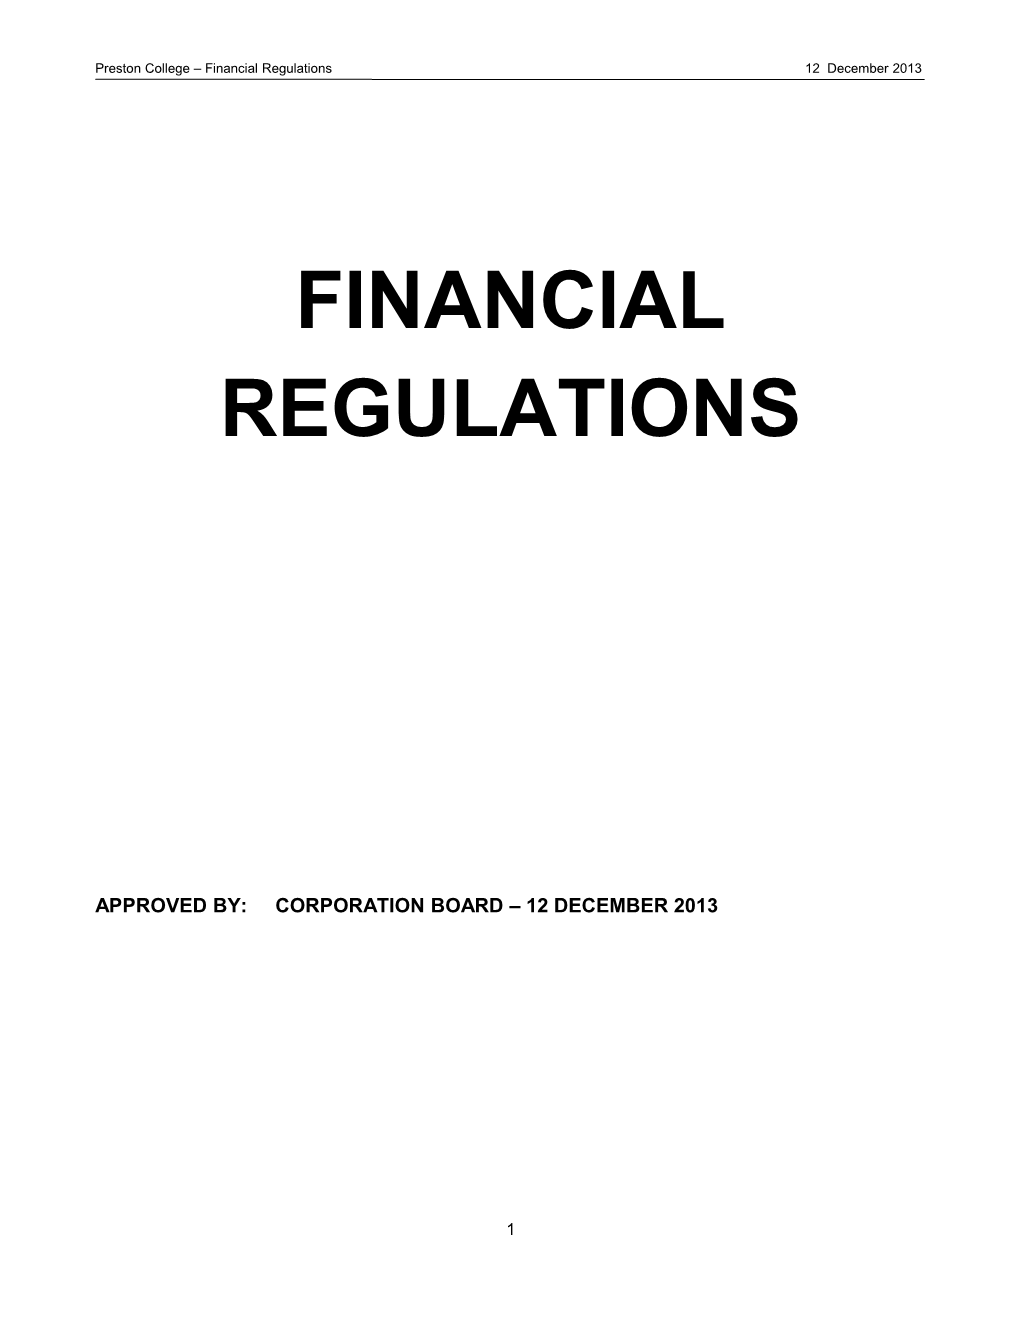 Preston College Financial Regulations12 December 2013